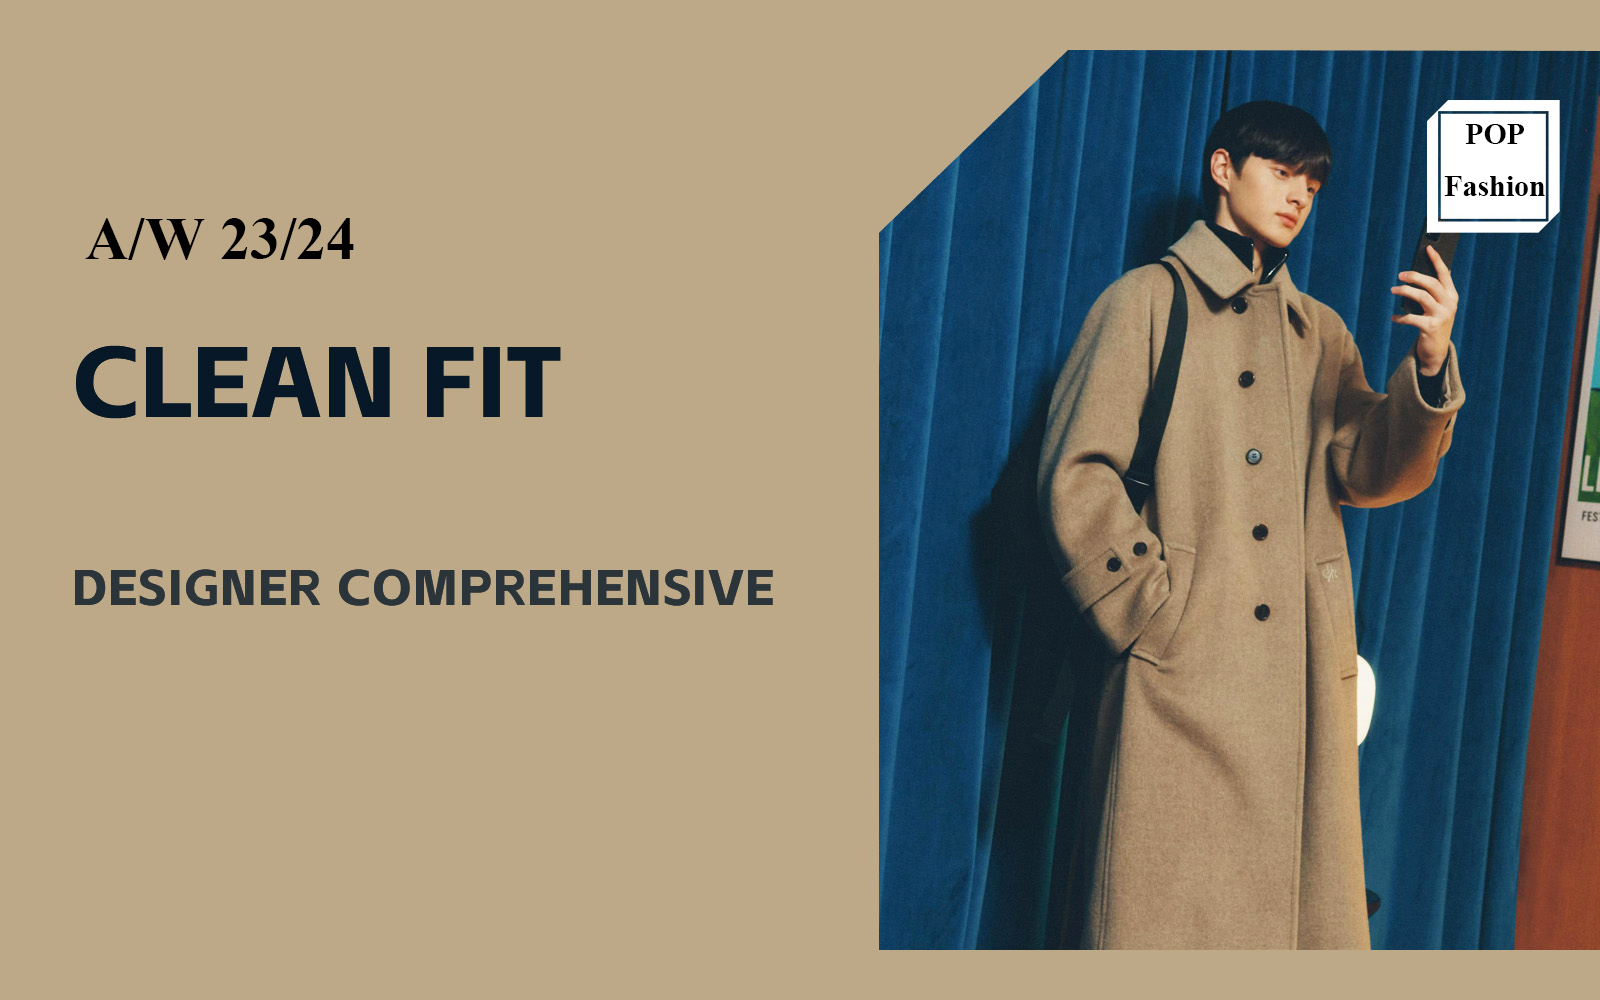 Clean Fit -- The Comprehensive Analysis of Korean Menswear Designer Brands